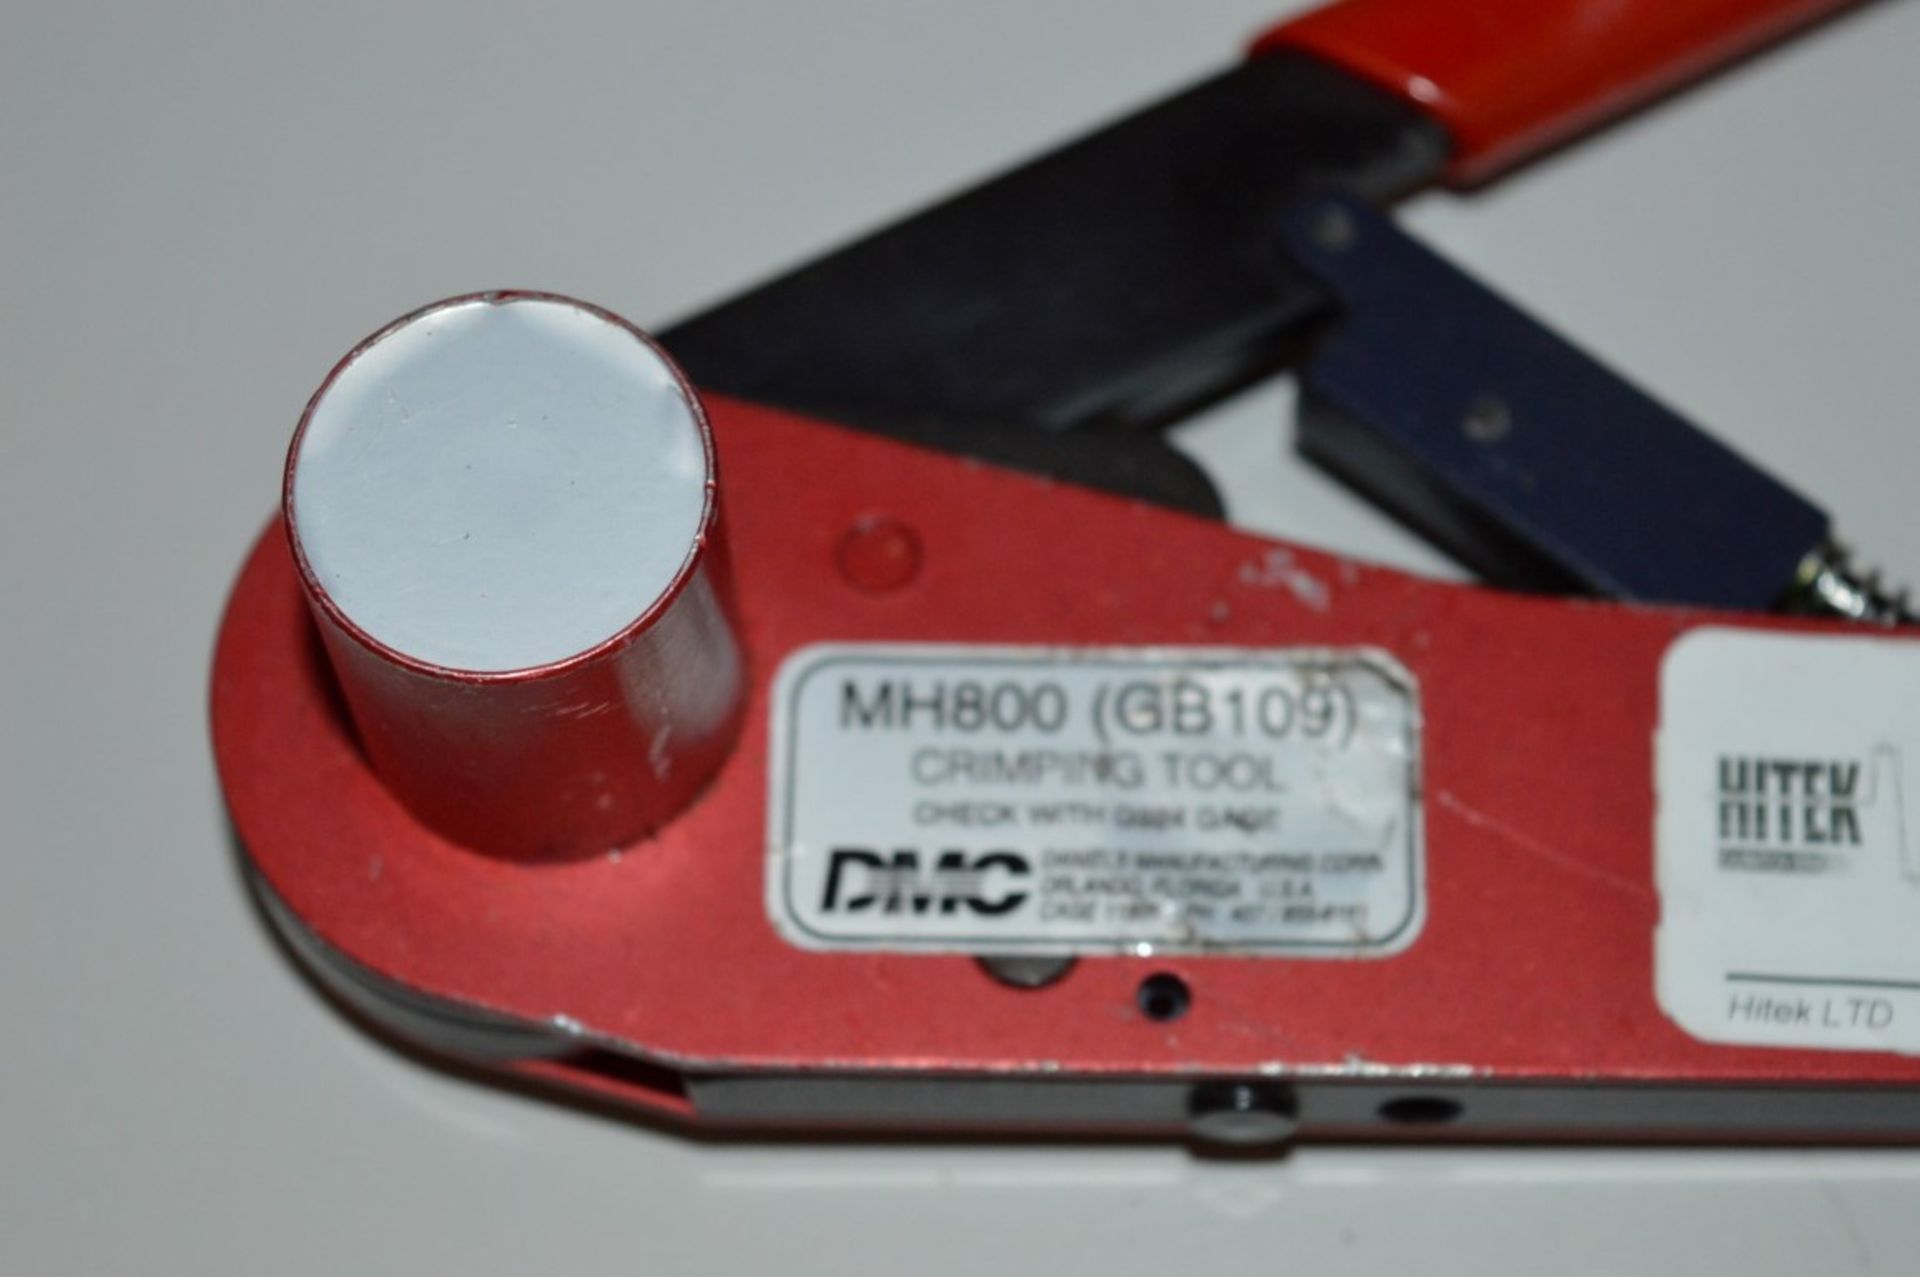 1 x DMC Crimp Tool MH800 (GB109) - Calibarated Until 21st March 2016 - Ultra precision crimp tool - Image 3 of 10